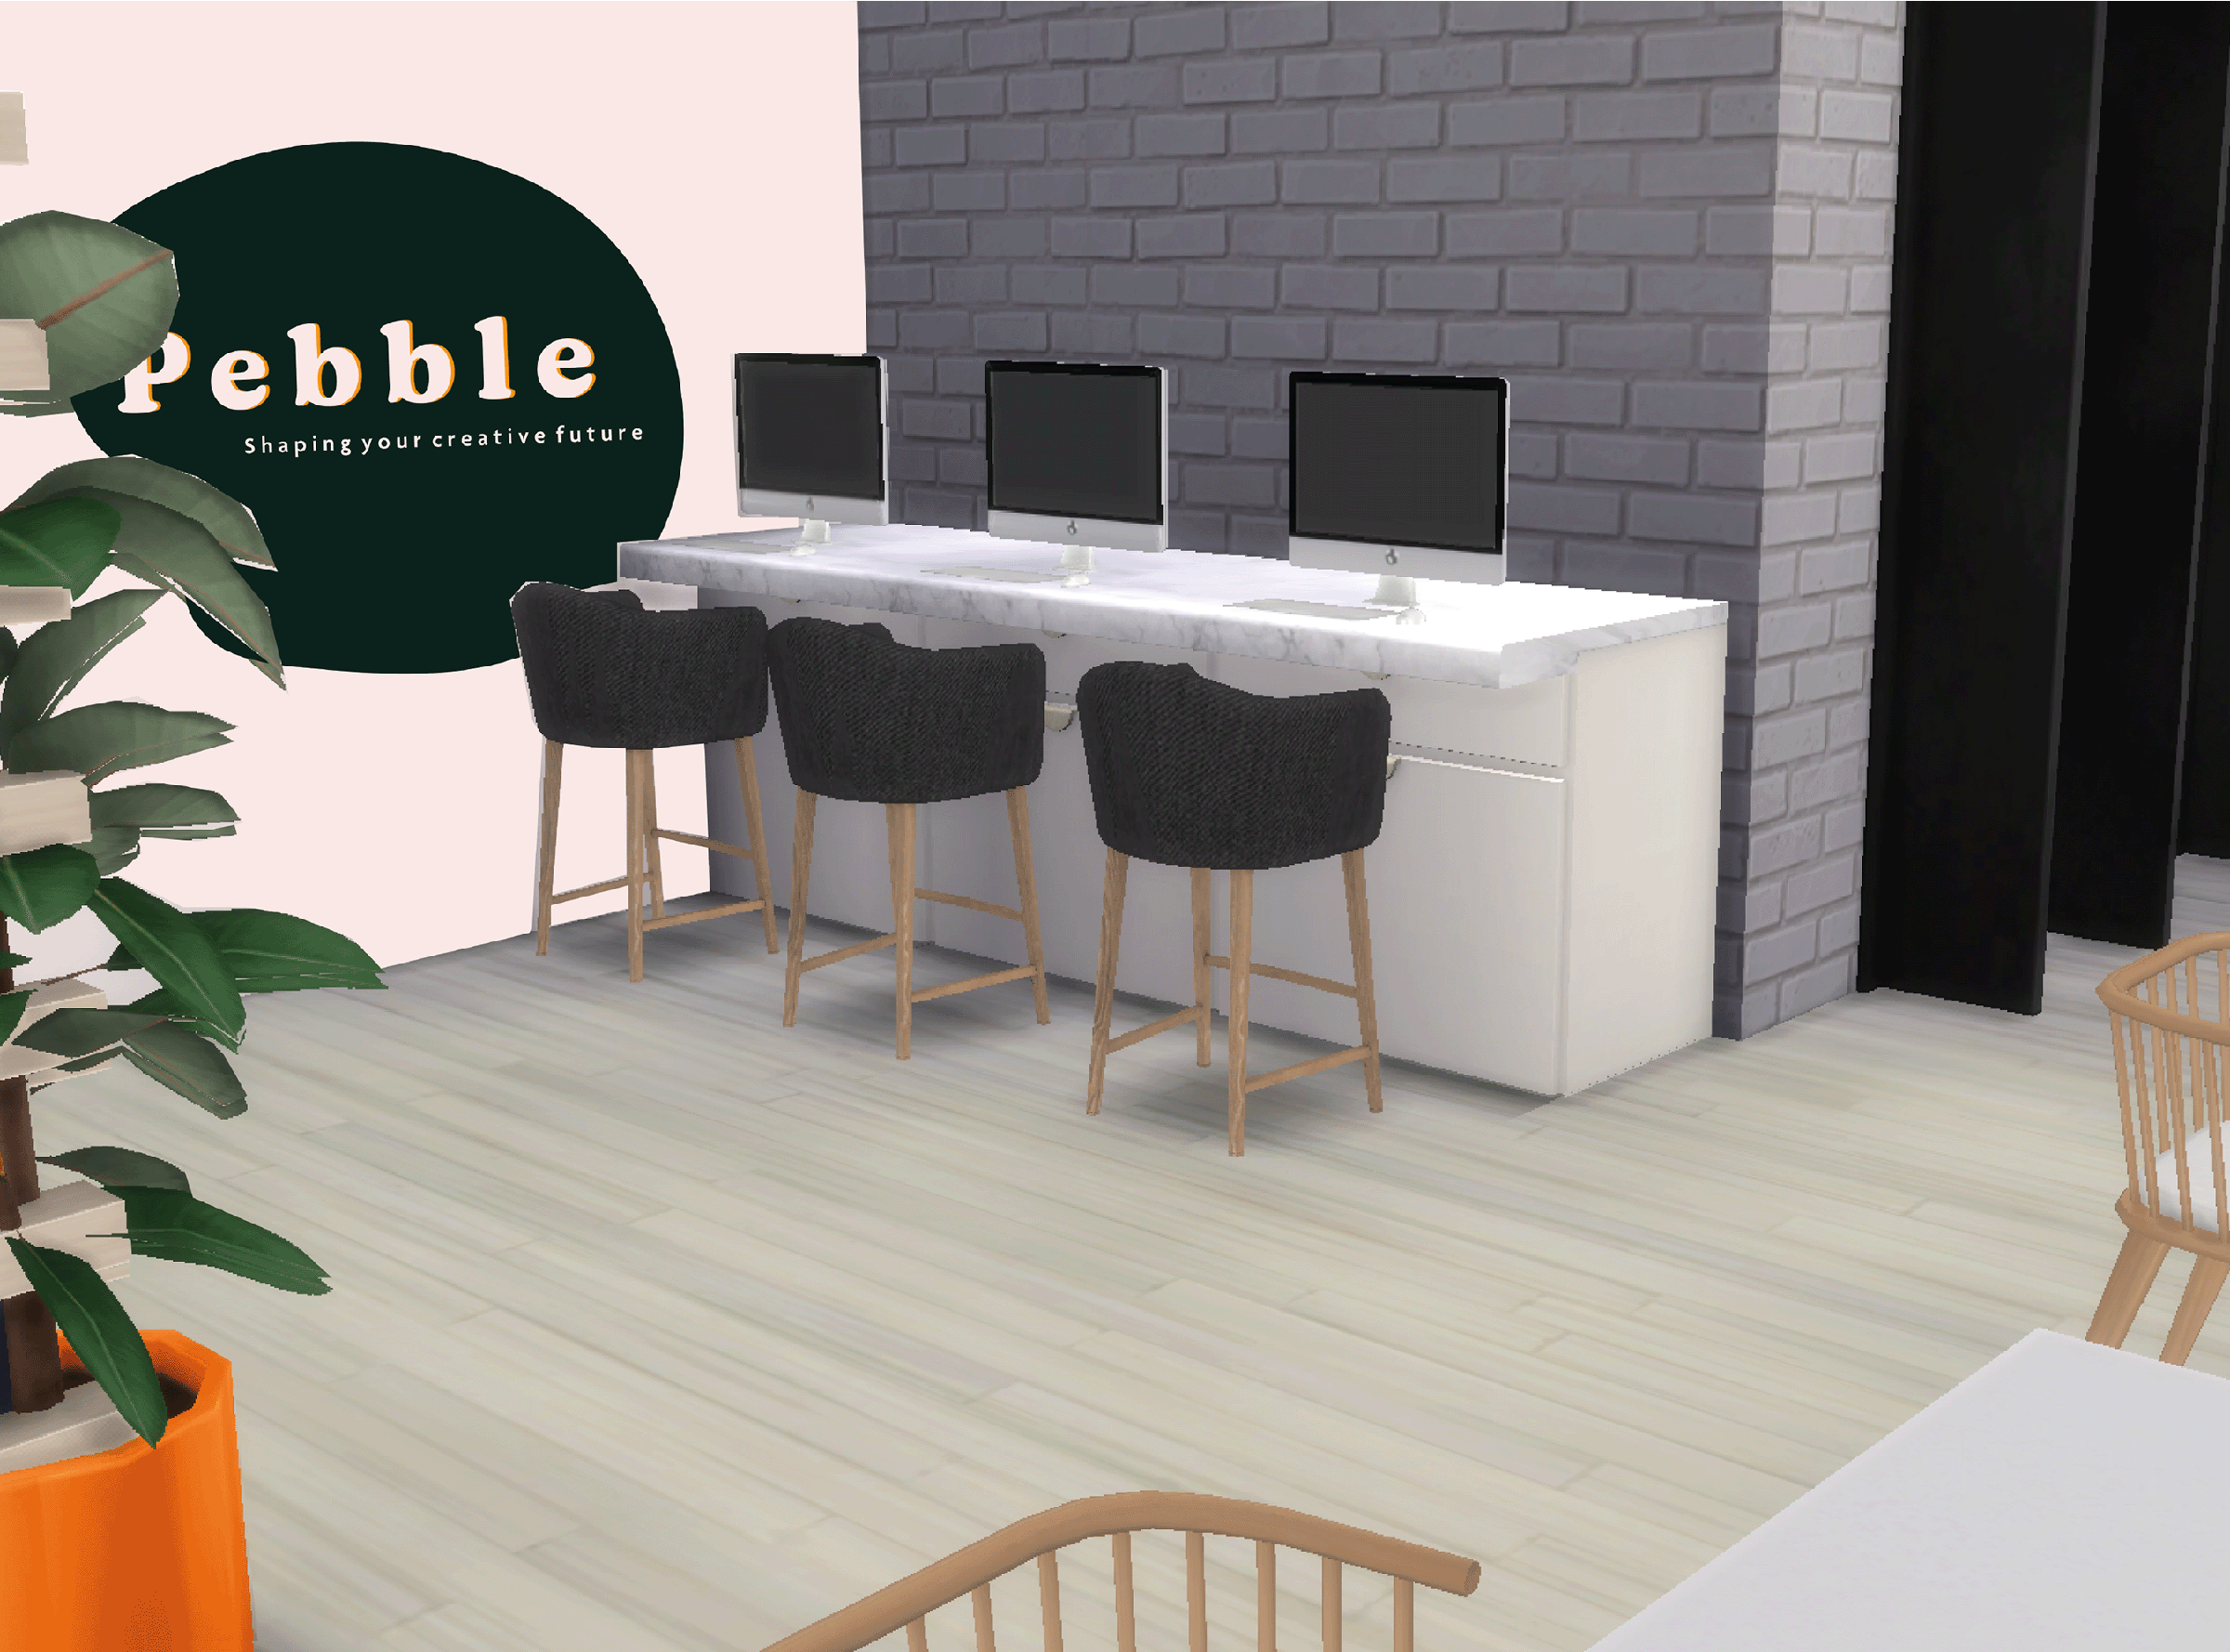 Visual mockup of the interior design of Pebble Studios